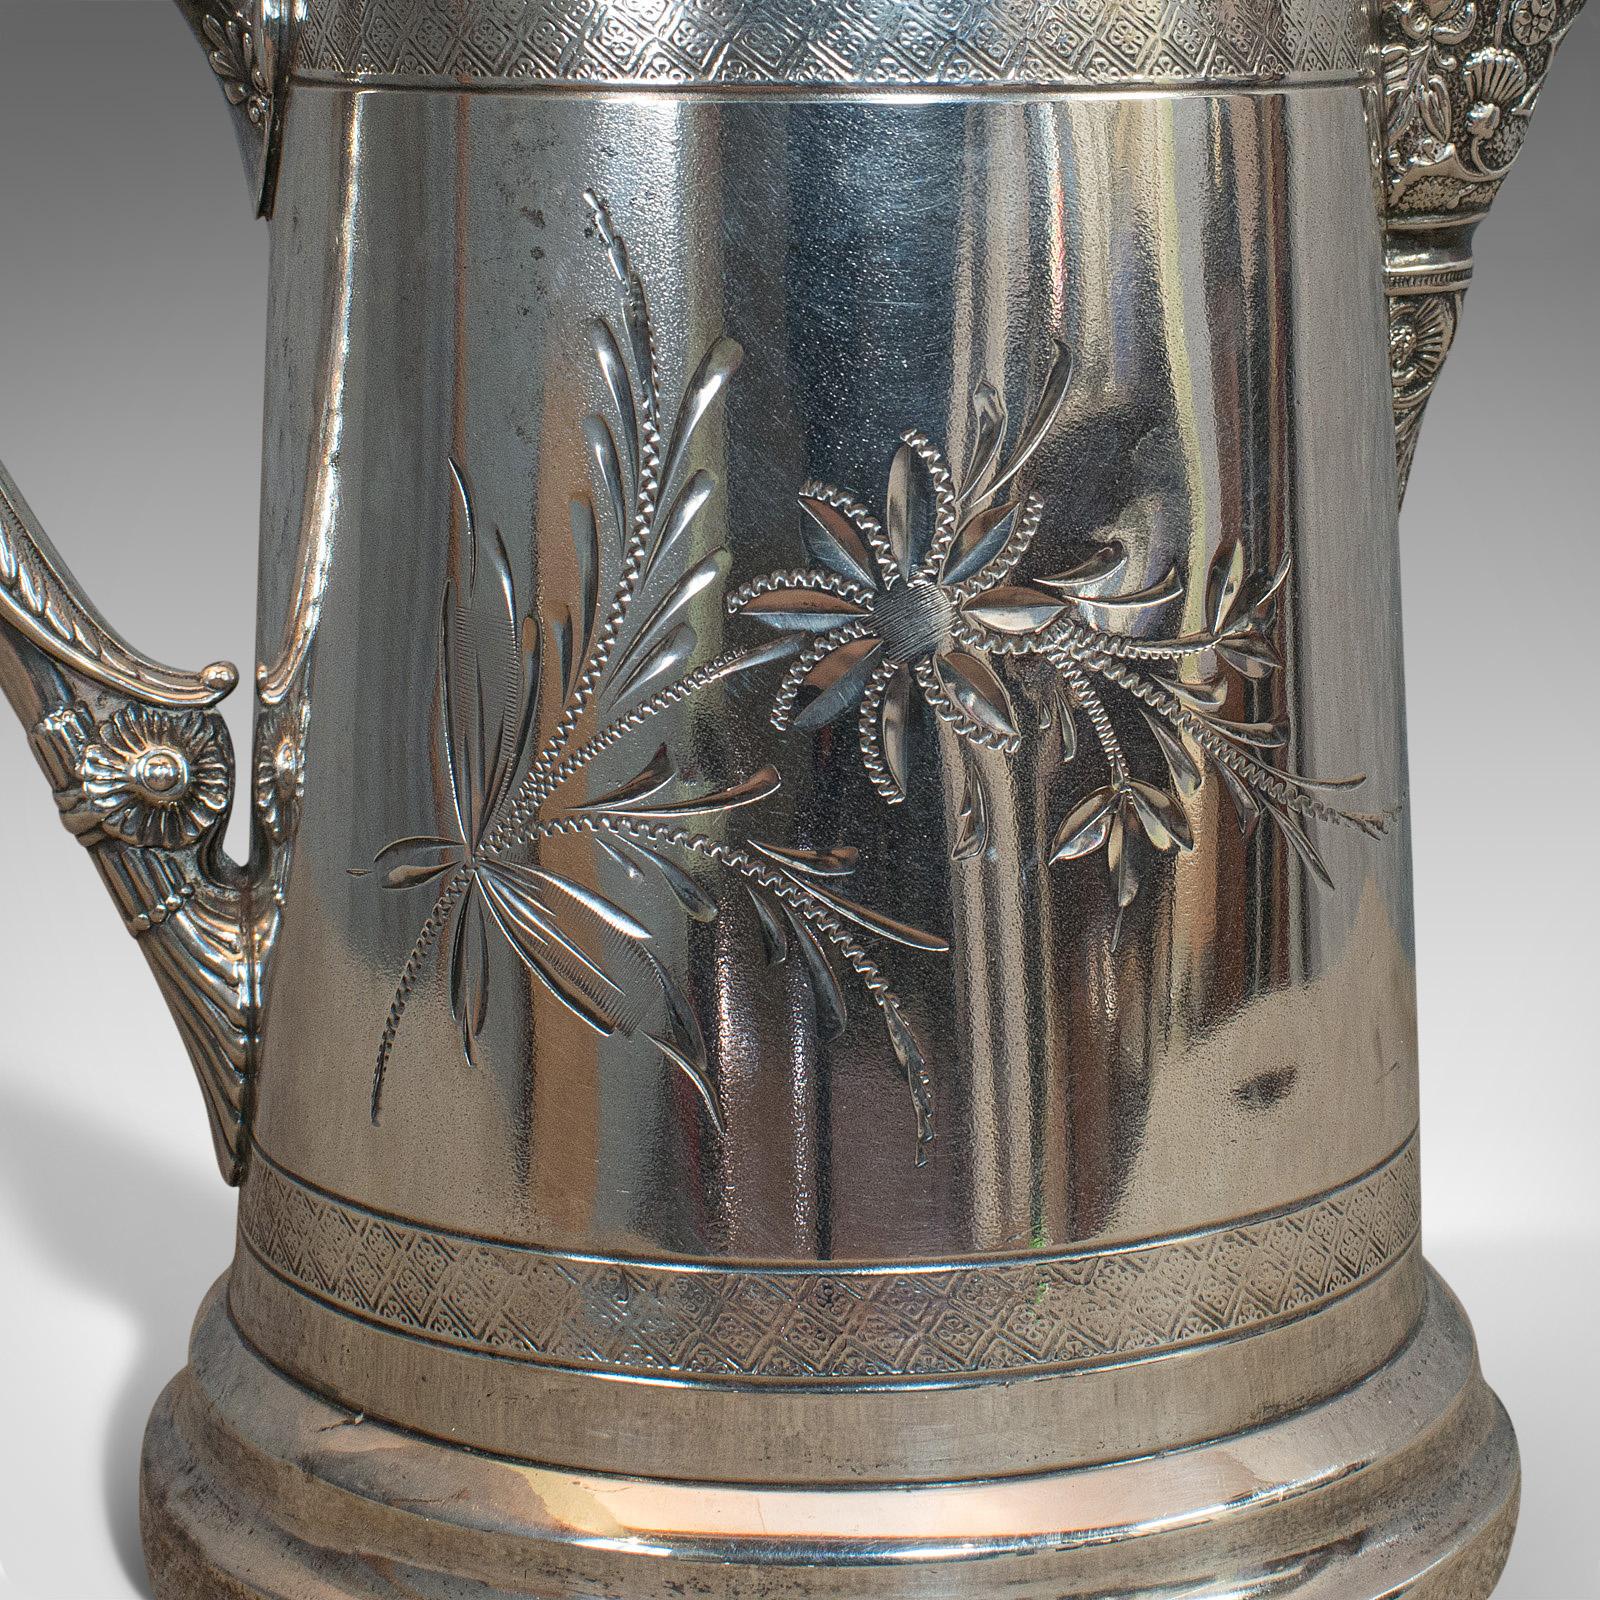 Antique Coffee Pot, English Silver Plate, Beverage Jug, 19th Century, circa 1900 6